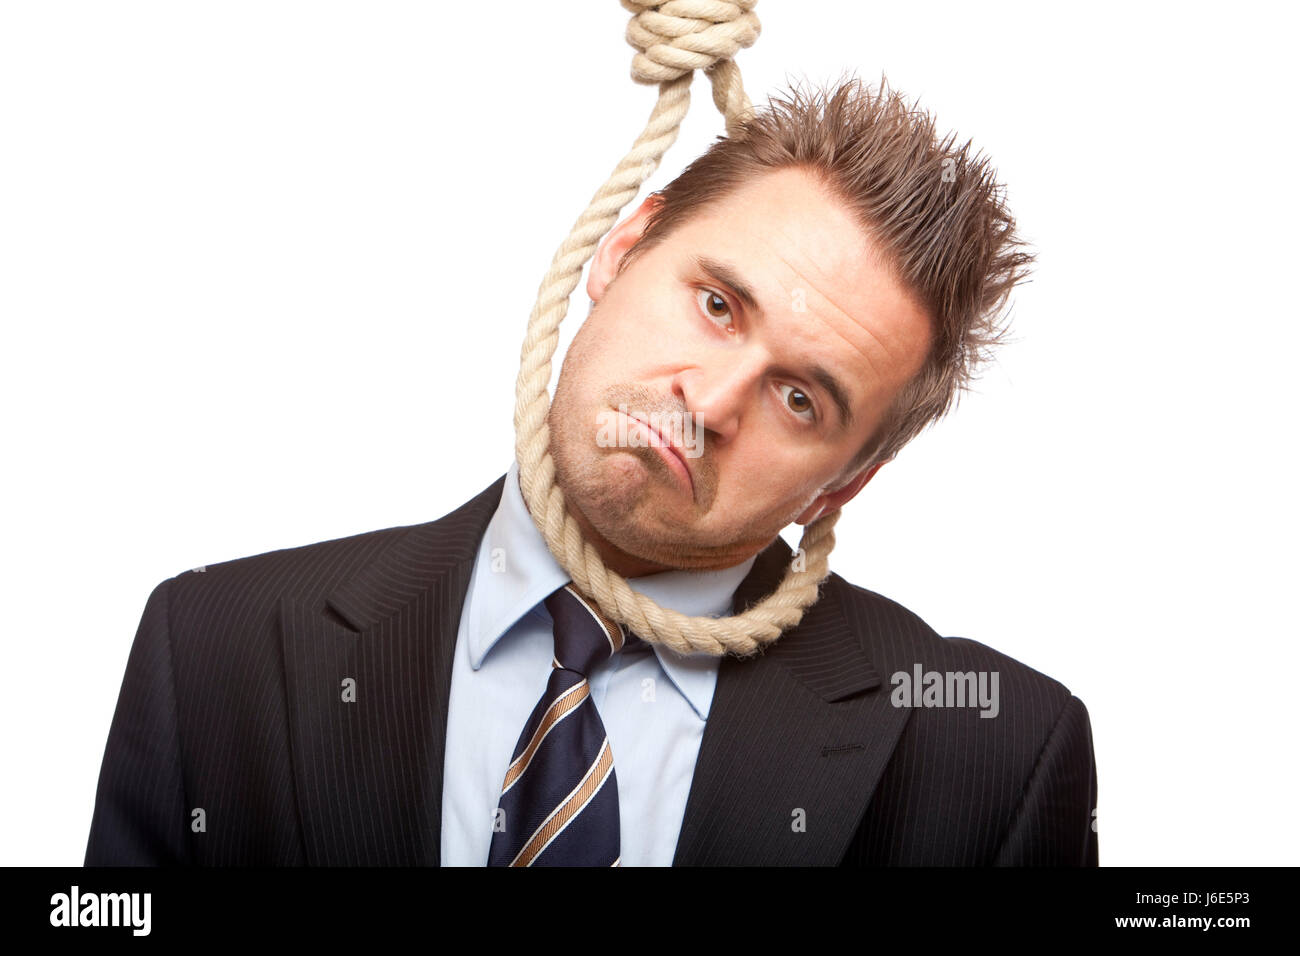 business man businessman suicide rope hanging hang up man bank lending Stock Photo